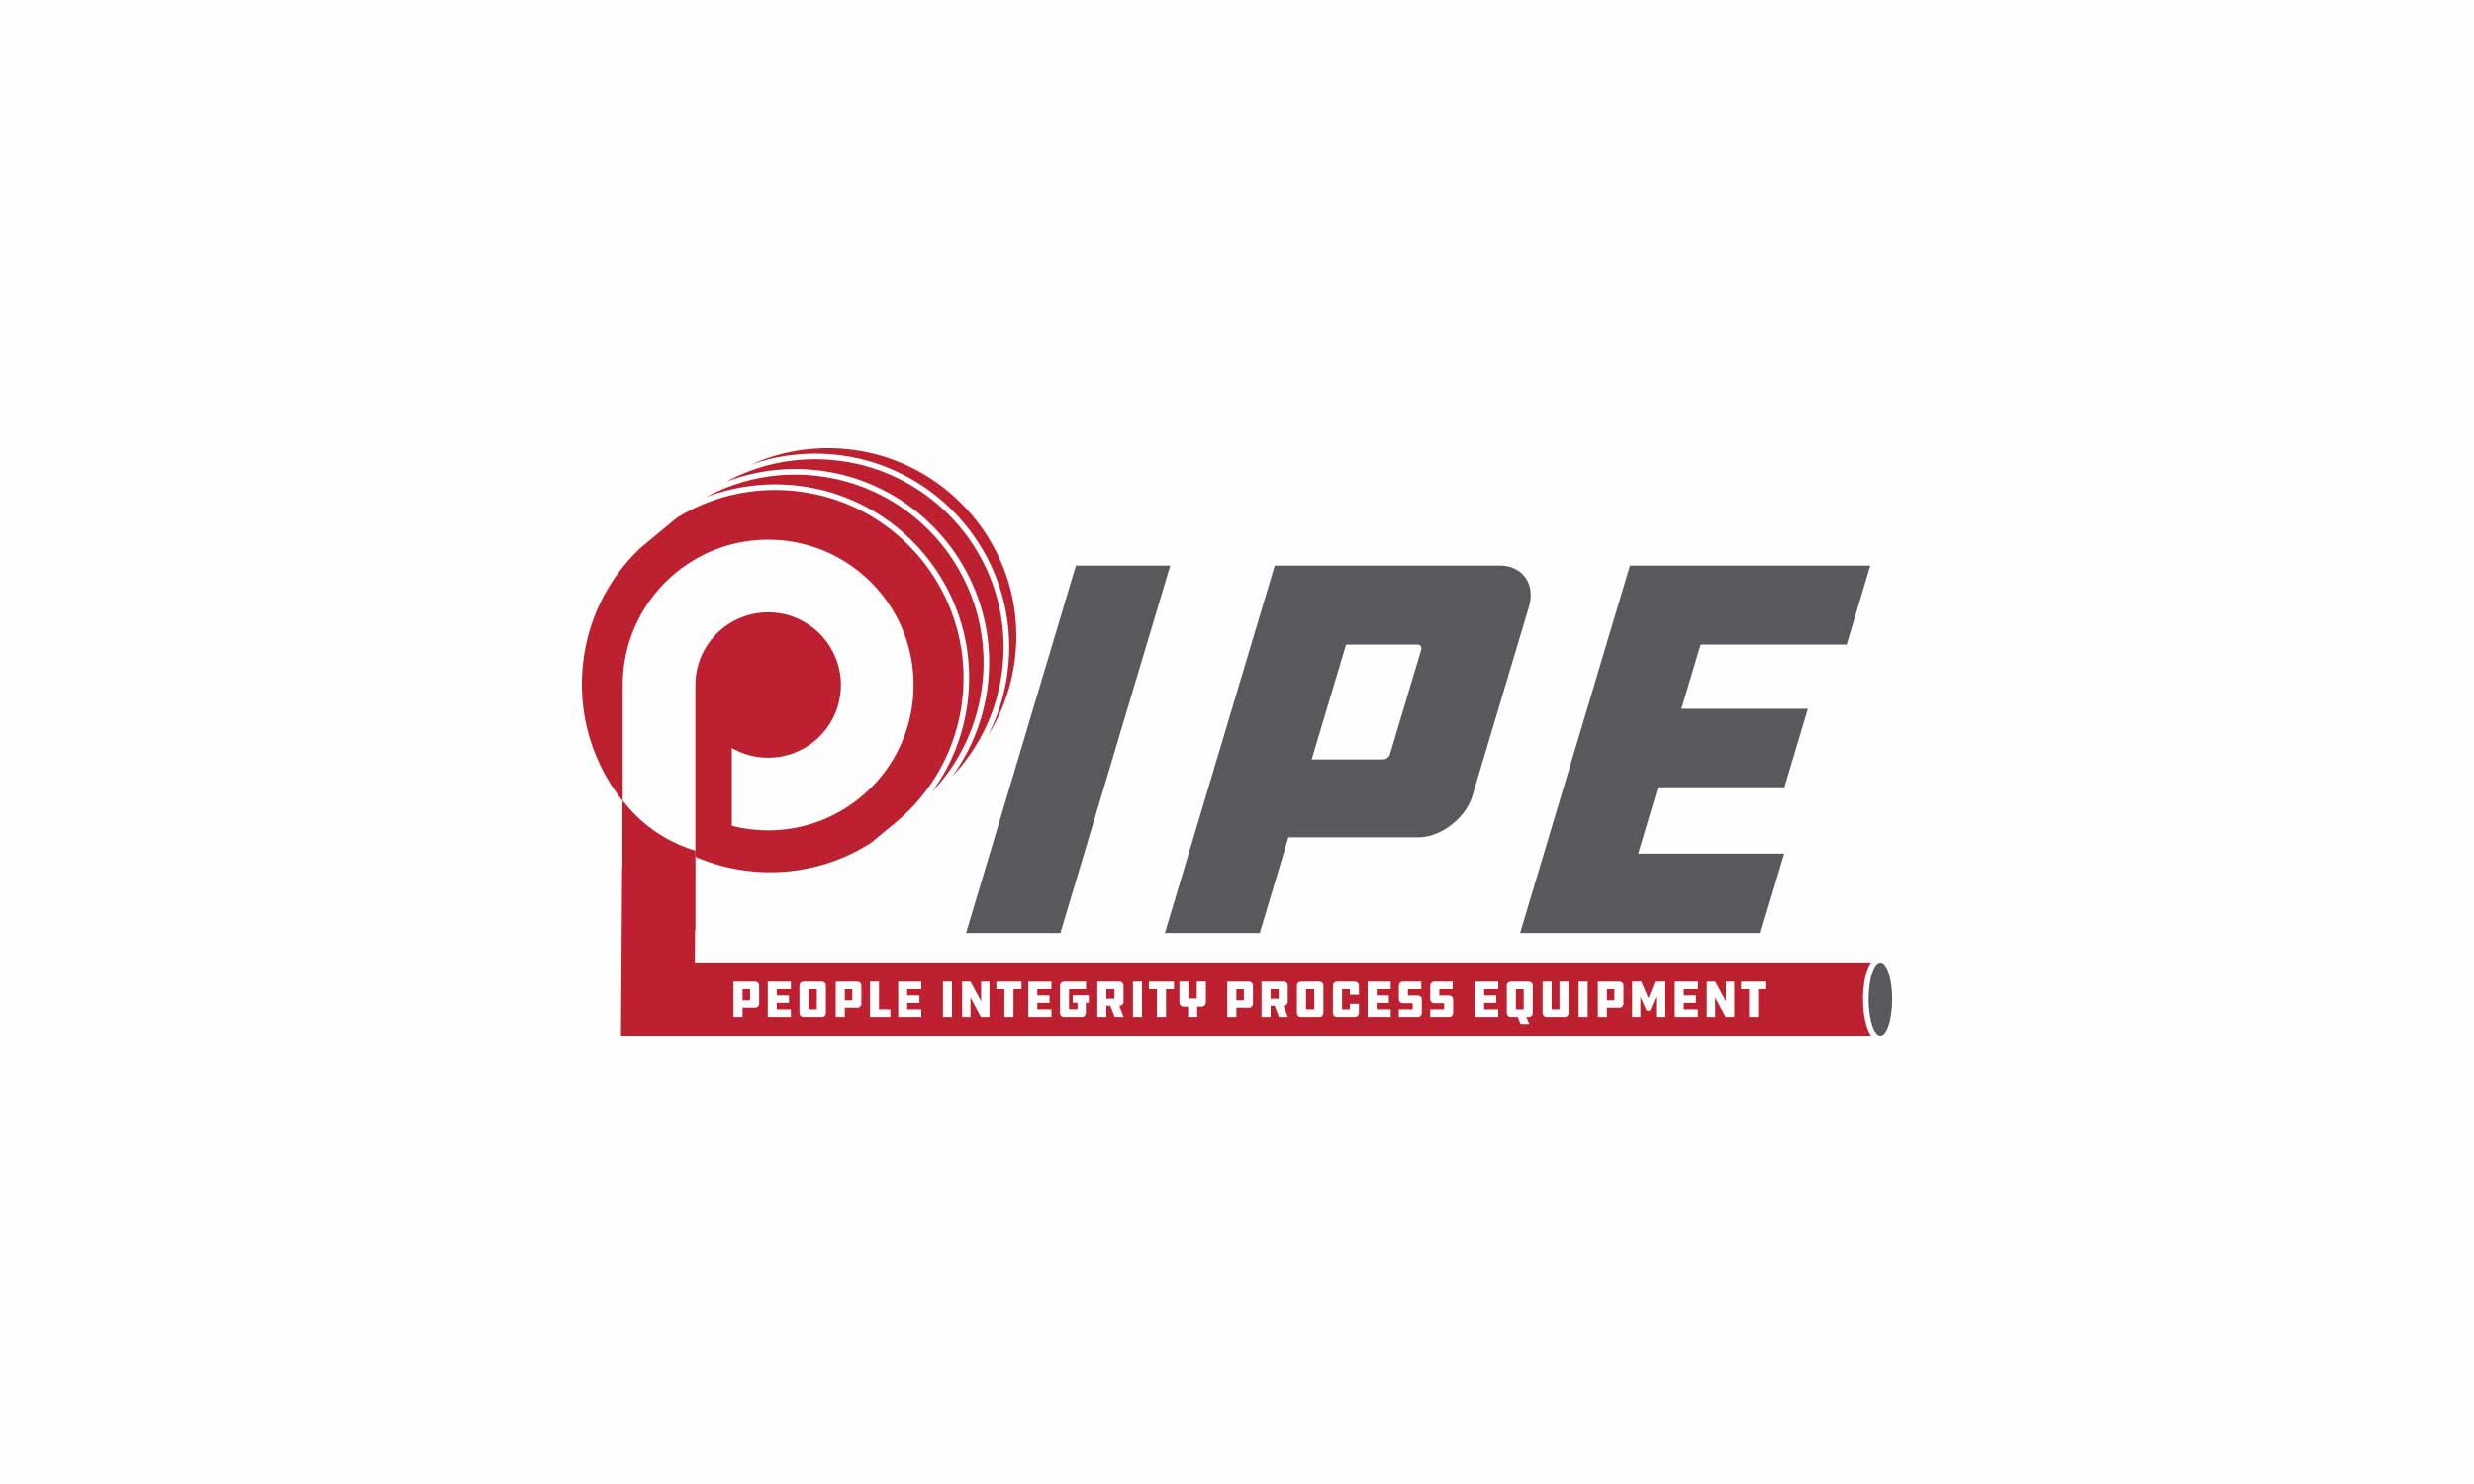 PIPE Logo Design for Printing